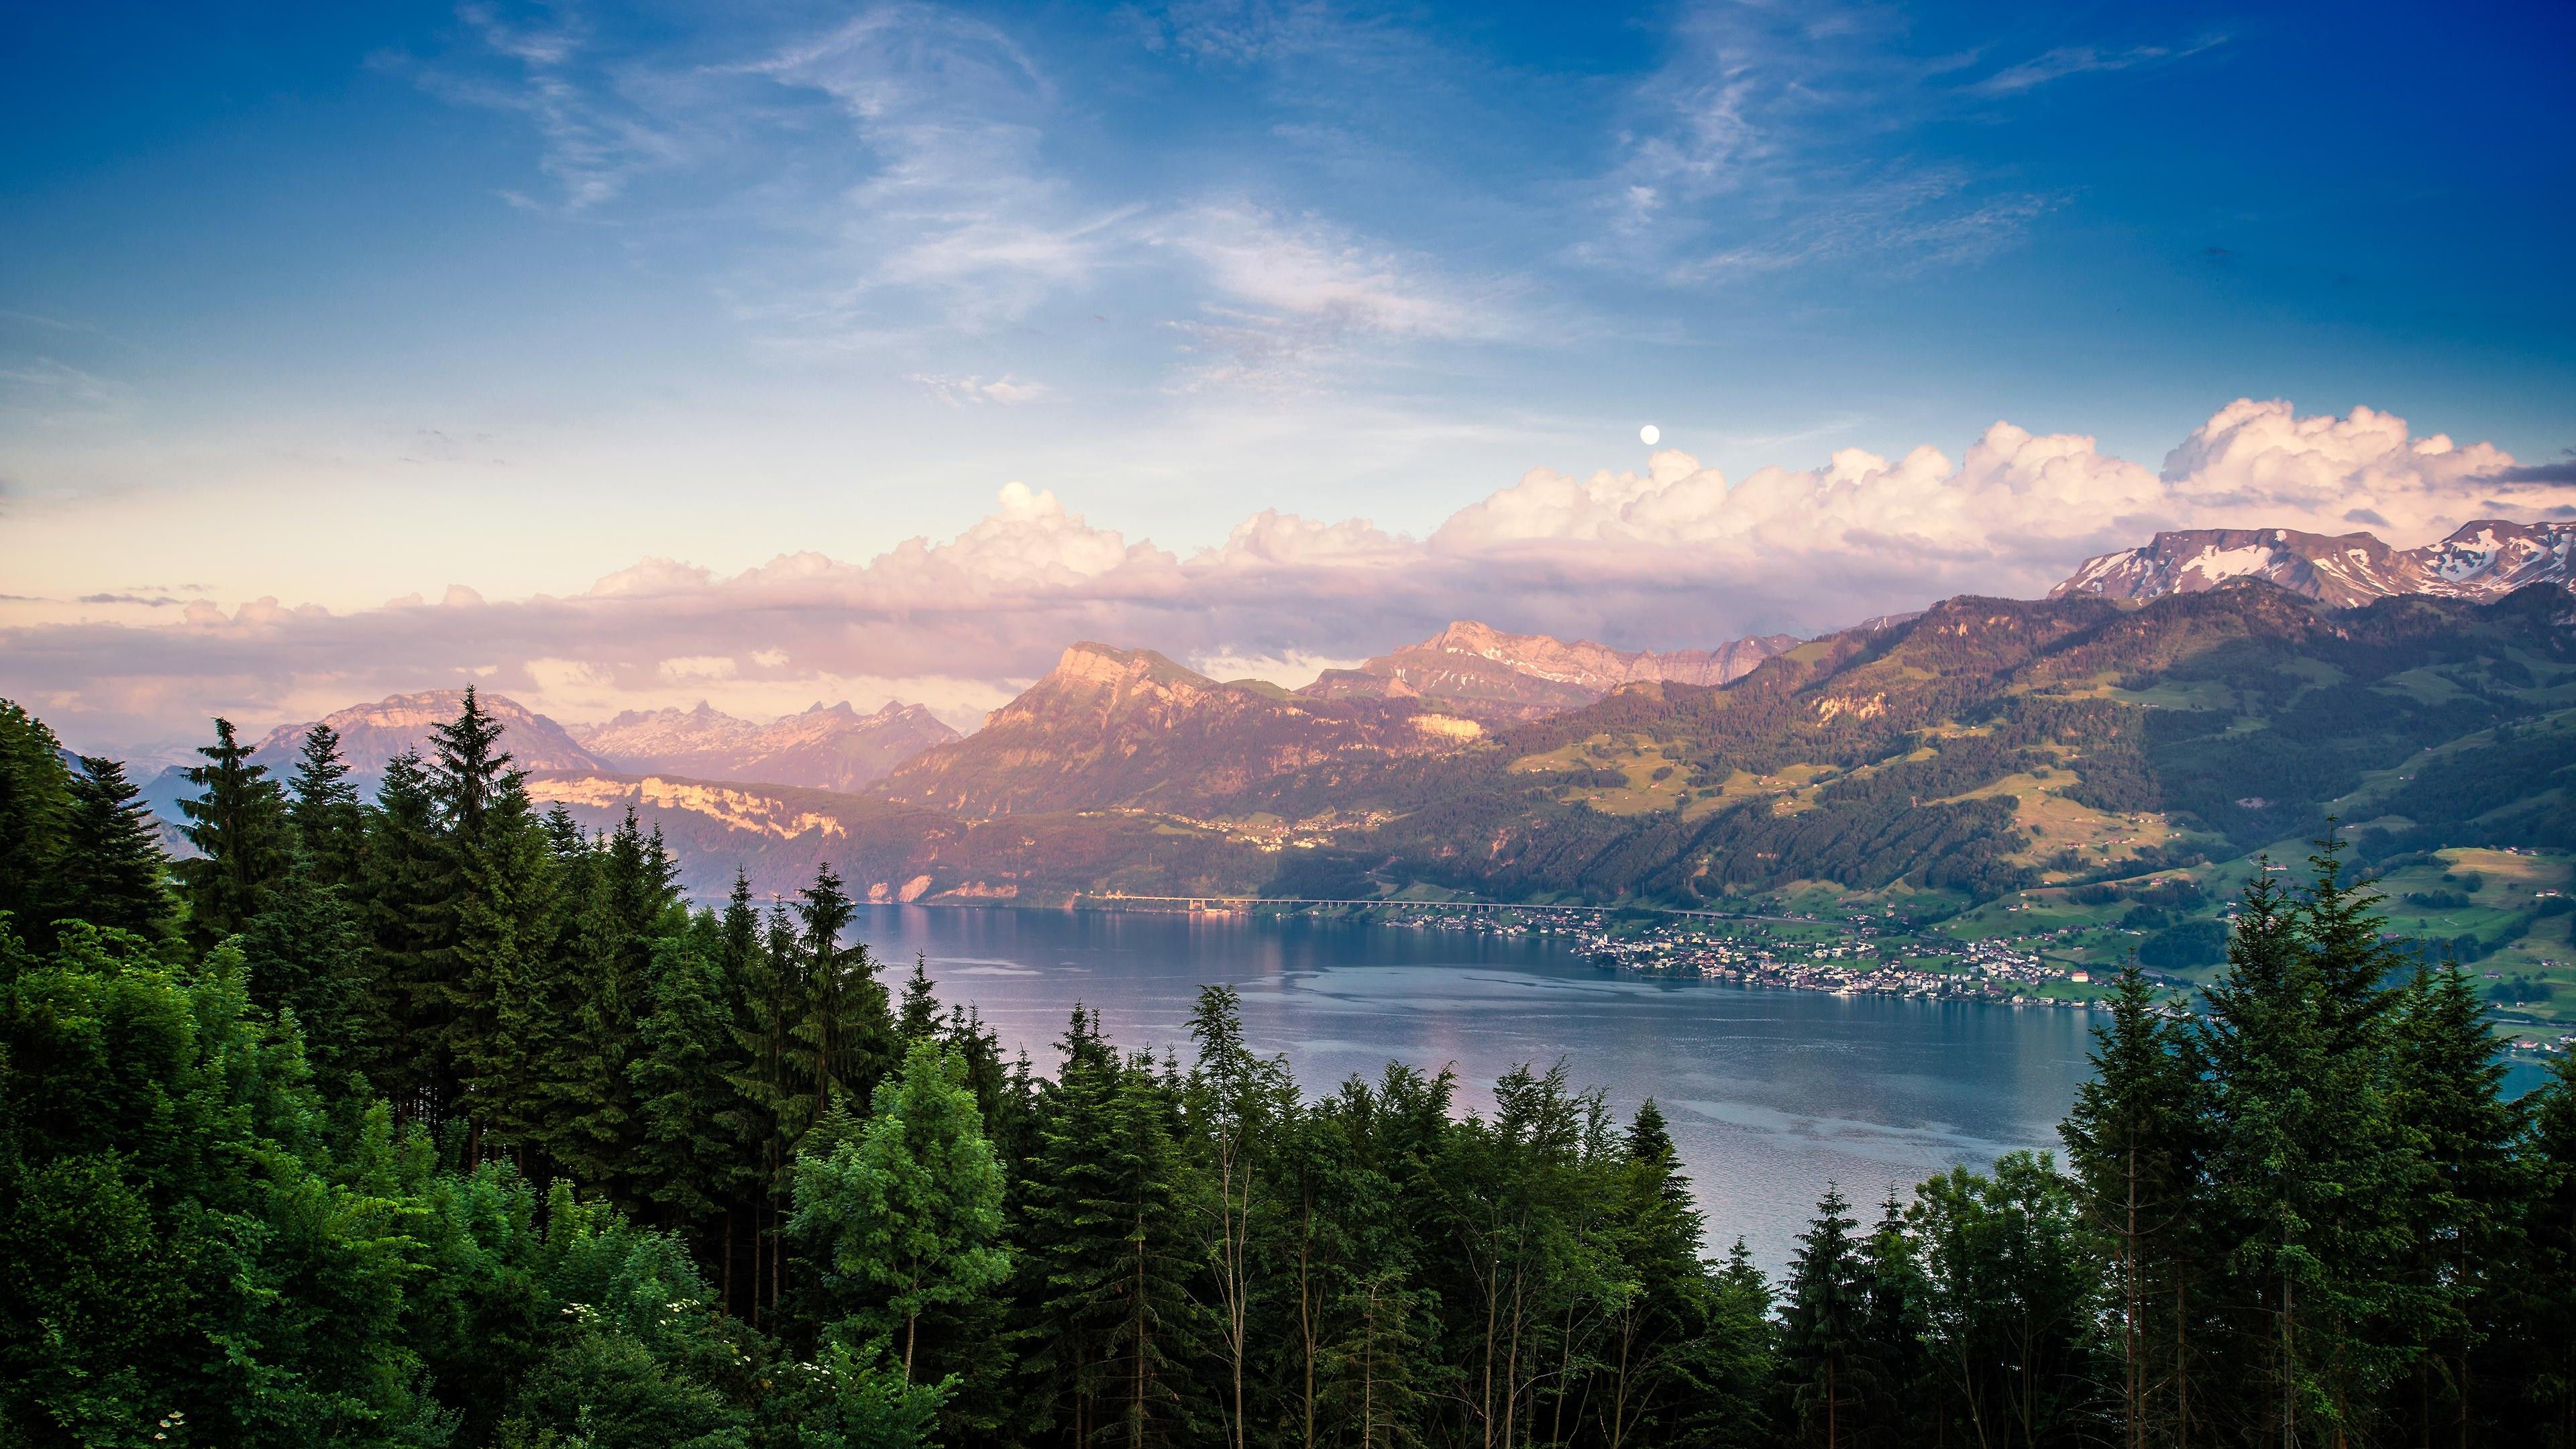 3840x2160 Lake Zurich 4k Hd Nature 4k Wallpaper Image Background